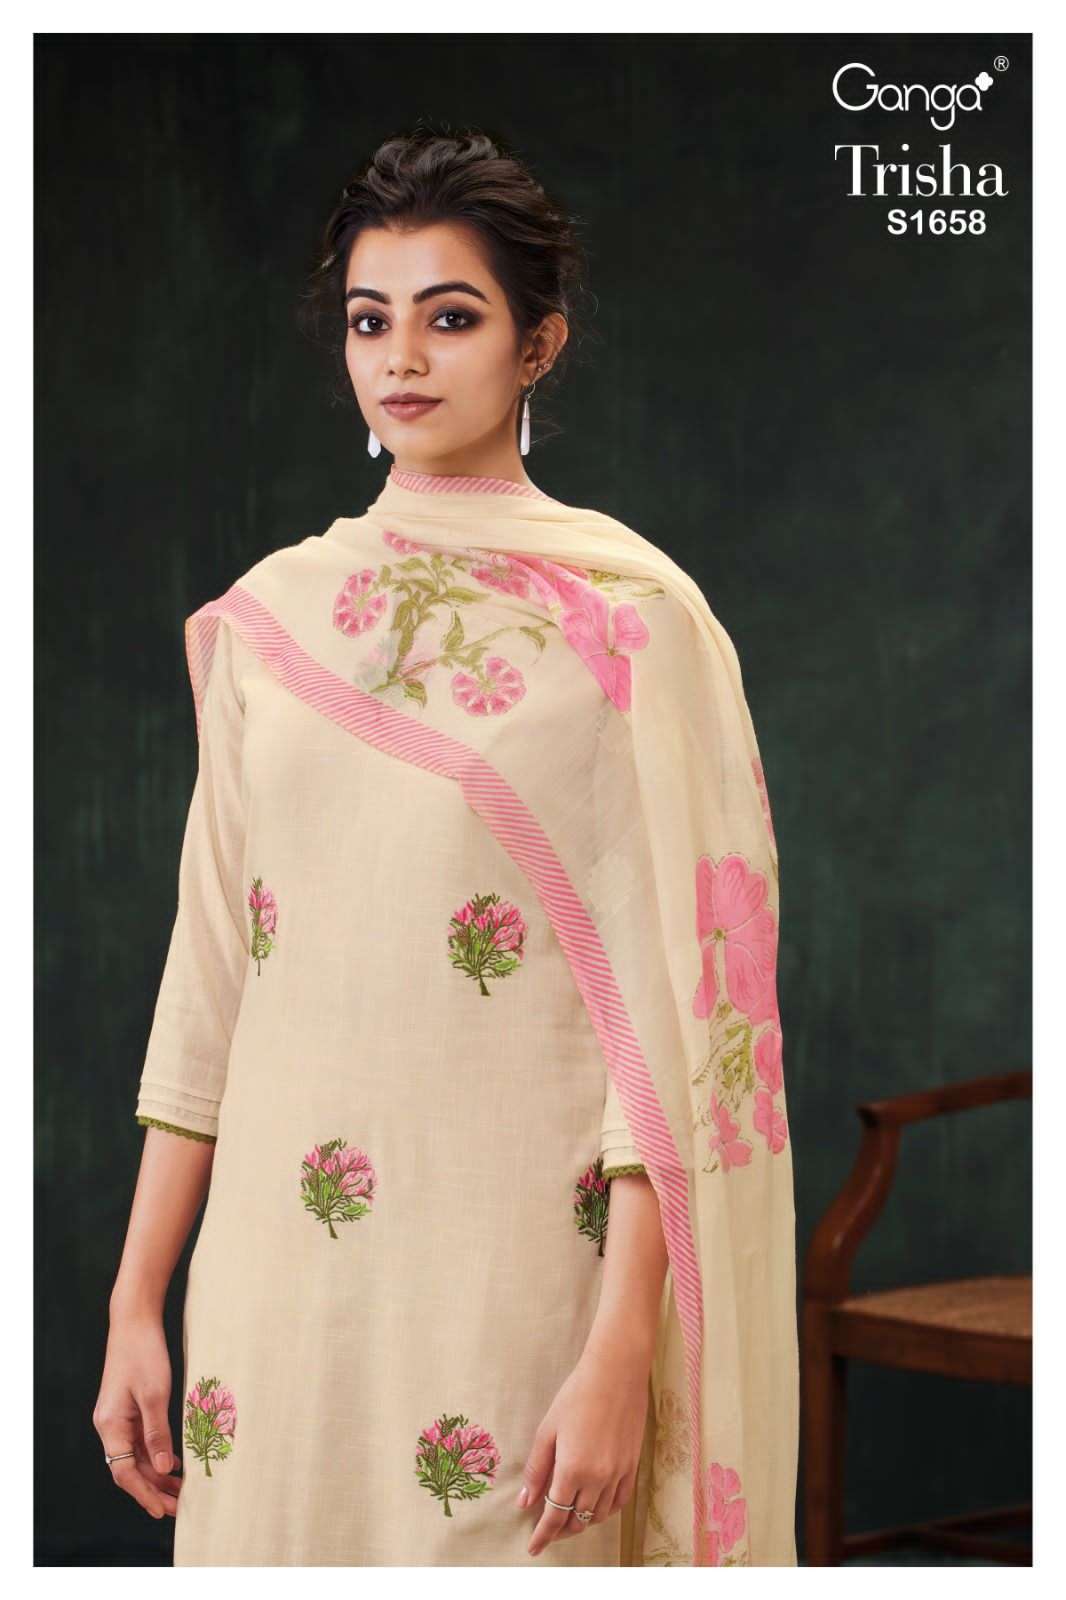 ganga fashion zilmil 1570 premium woven silk fancy unstich dress material collection surat